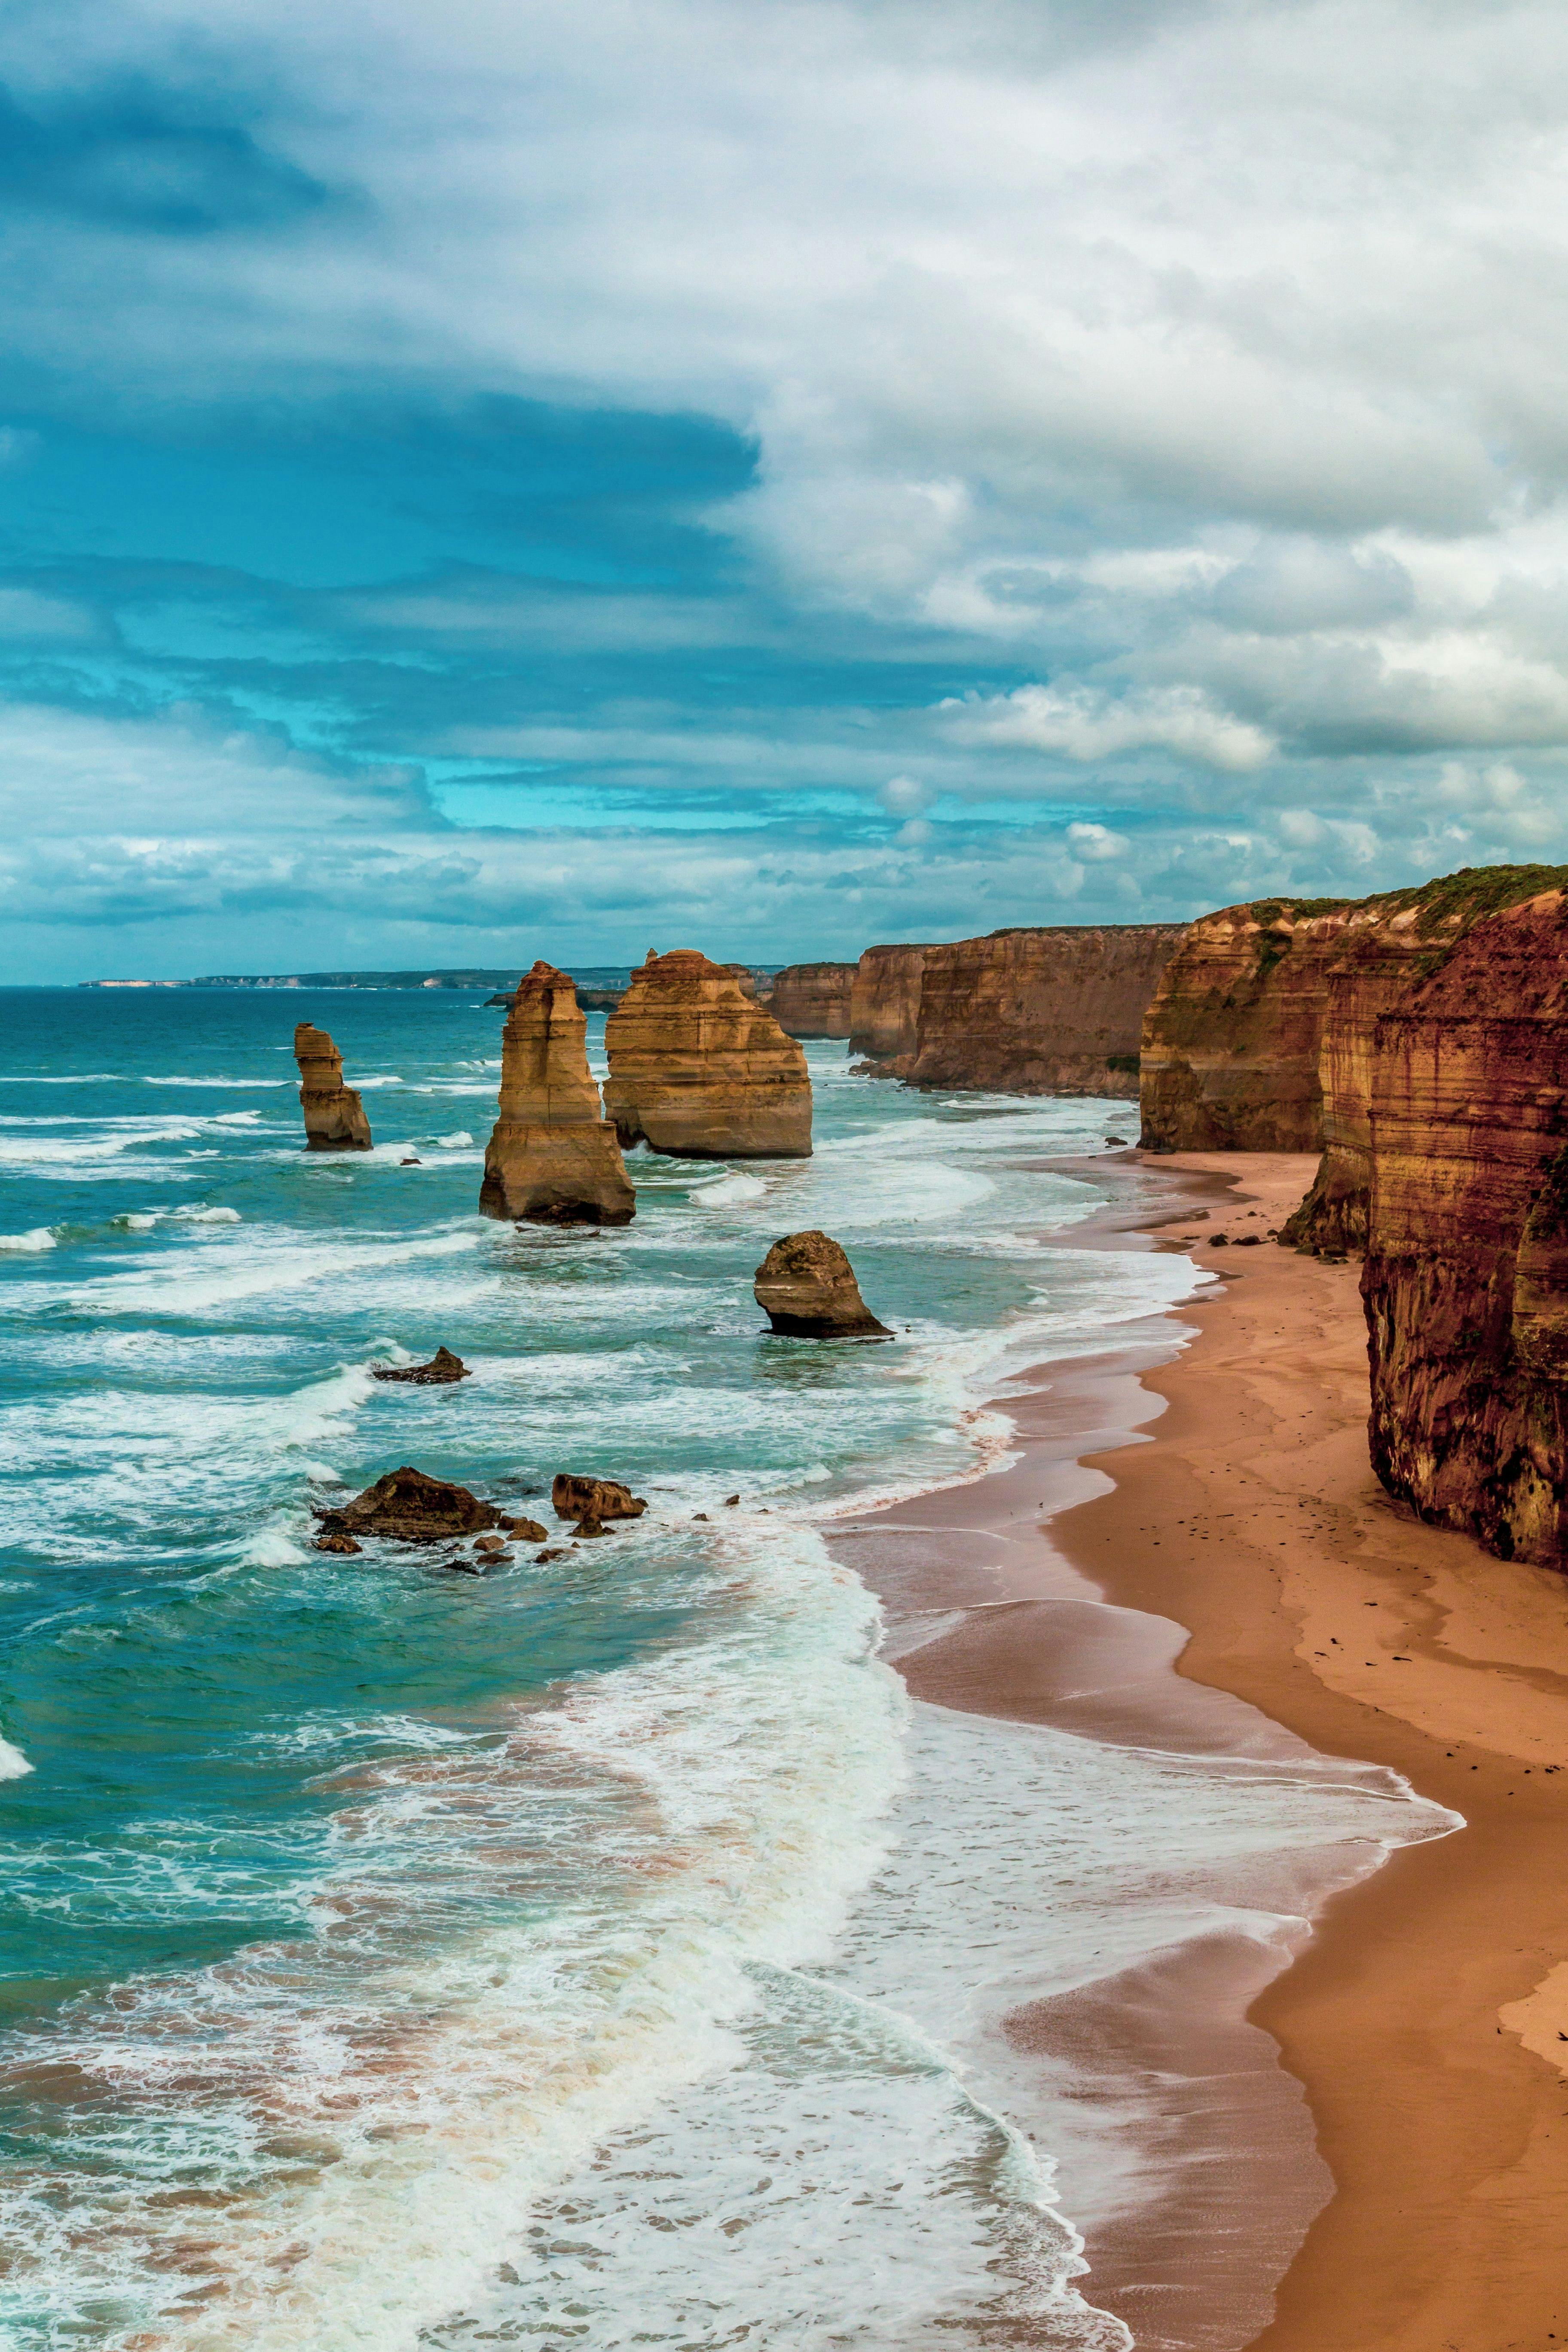 View on Twelve Apostles from the Great Ocean Road in Australia.